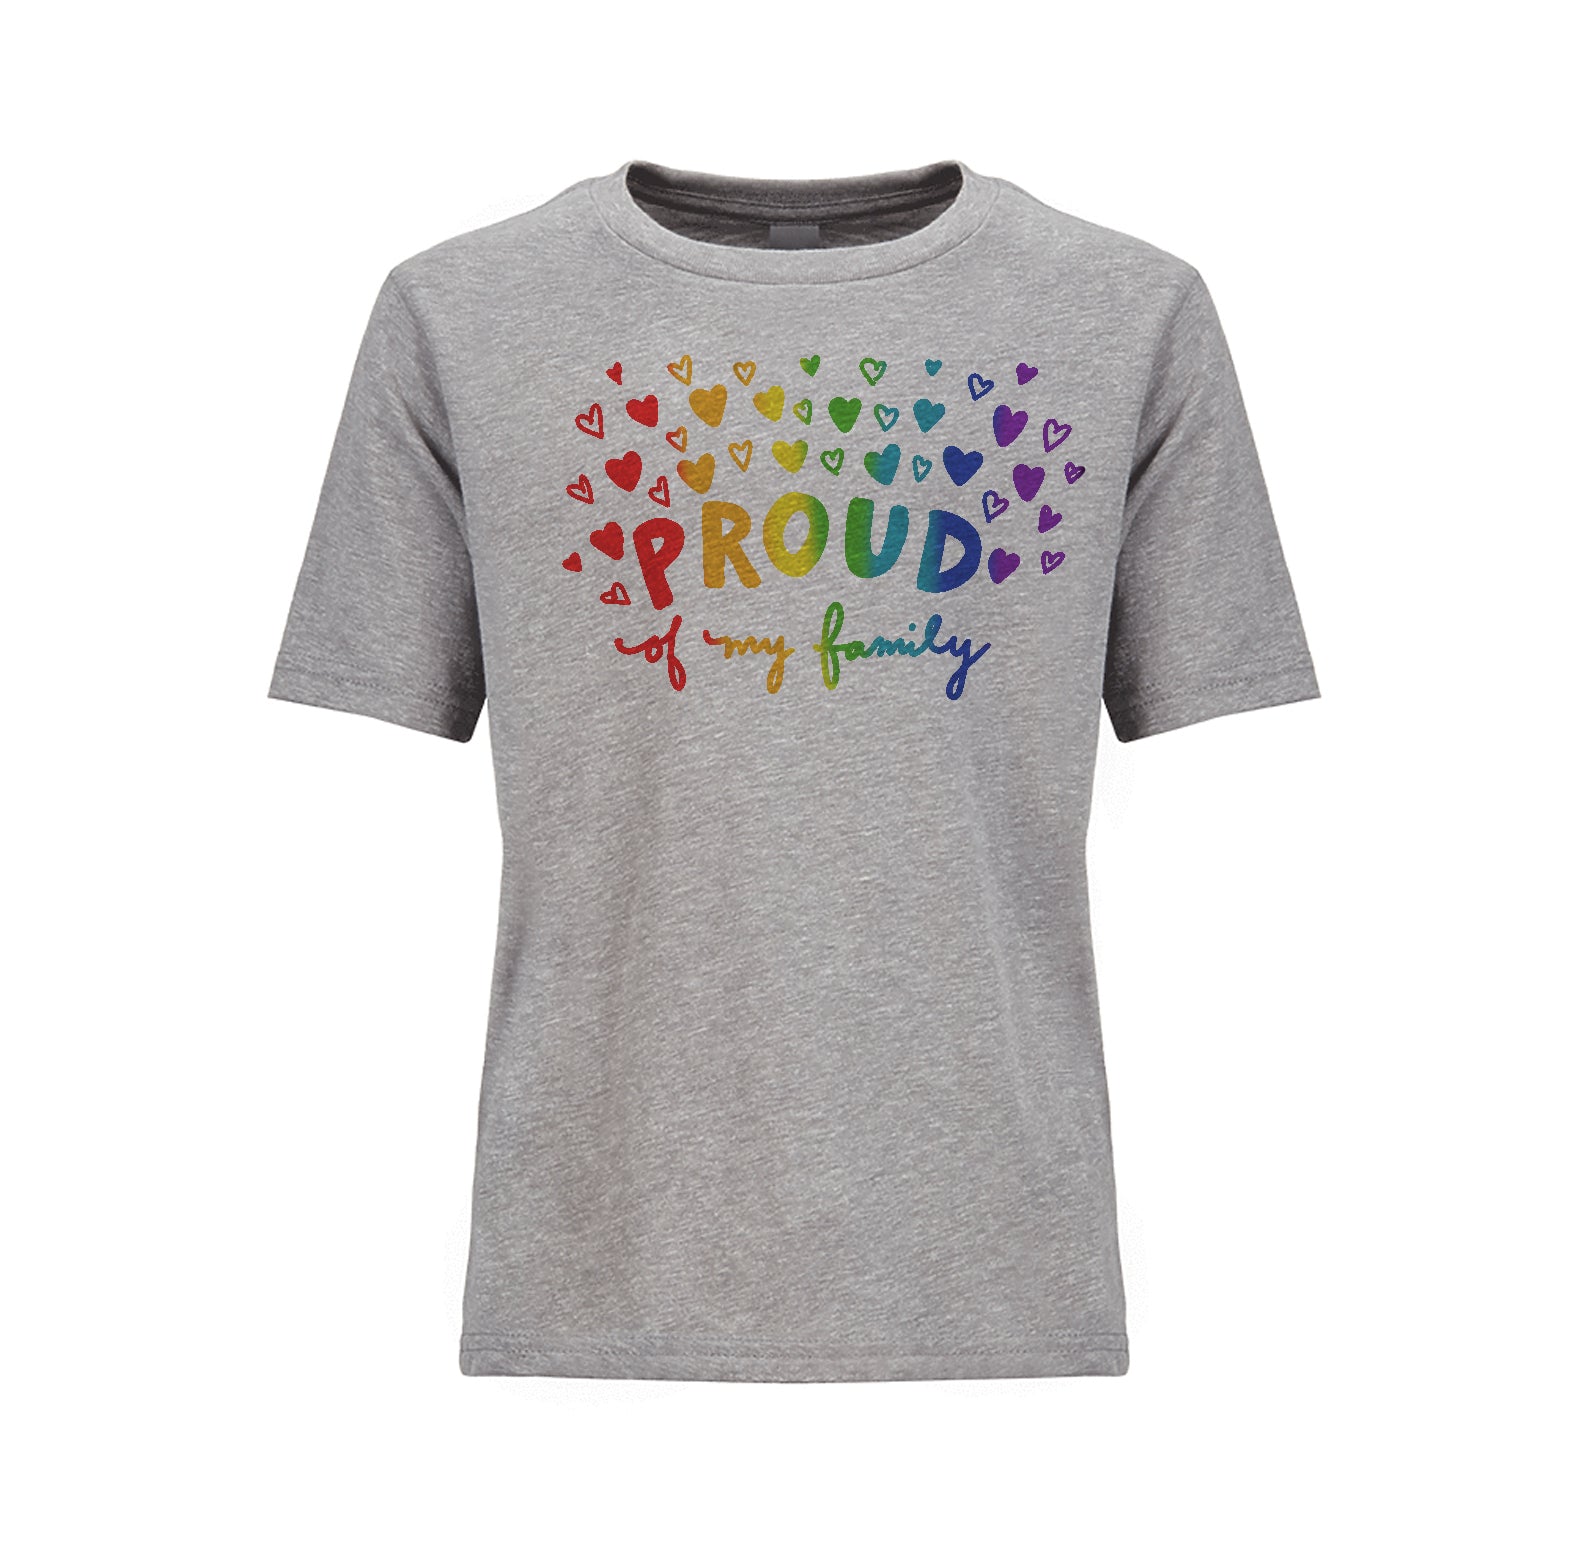 Proud of my family : Youth T-shirt, Soft, Pride, LGBTQIA Rainbow Flag Free Shipping